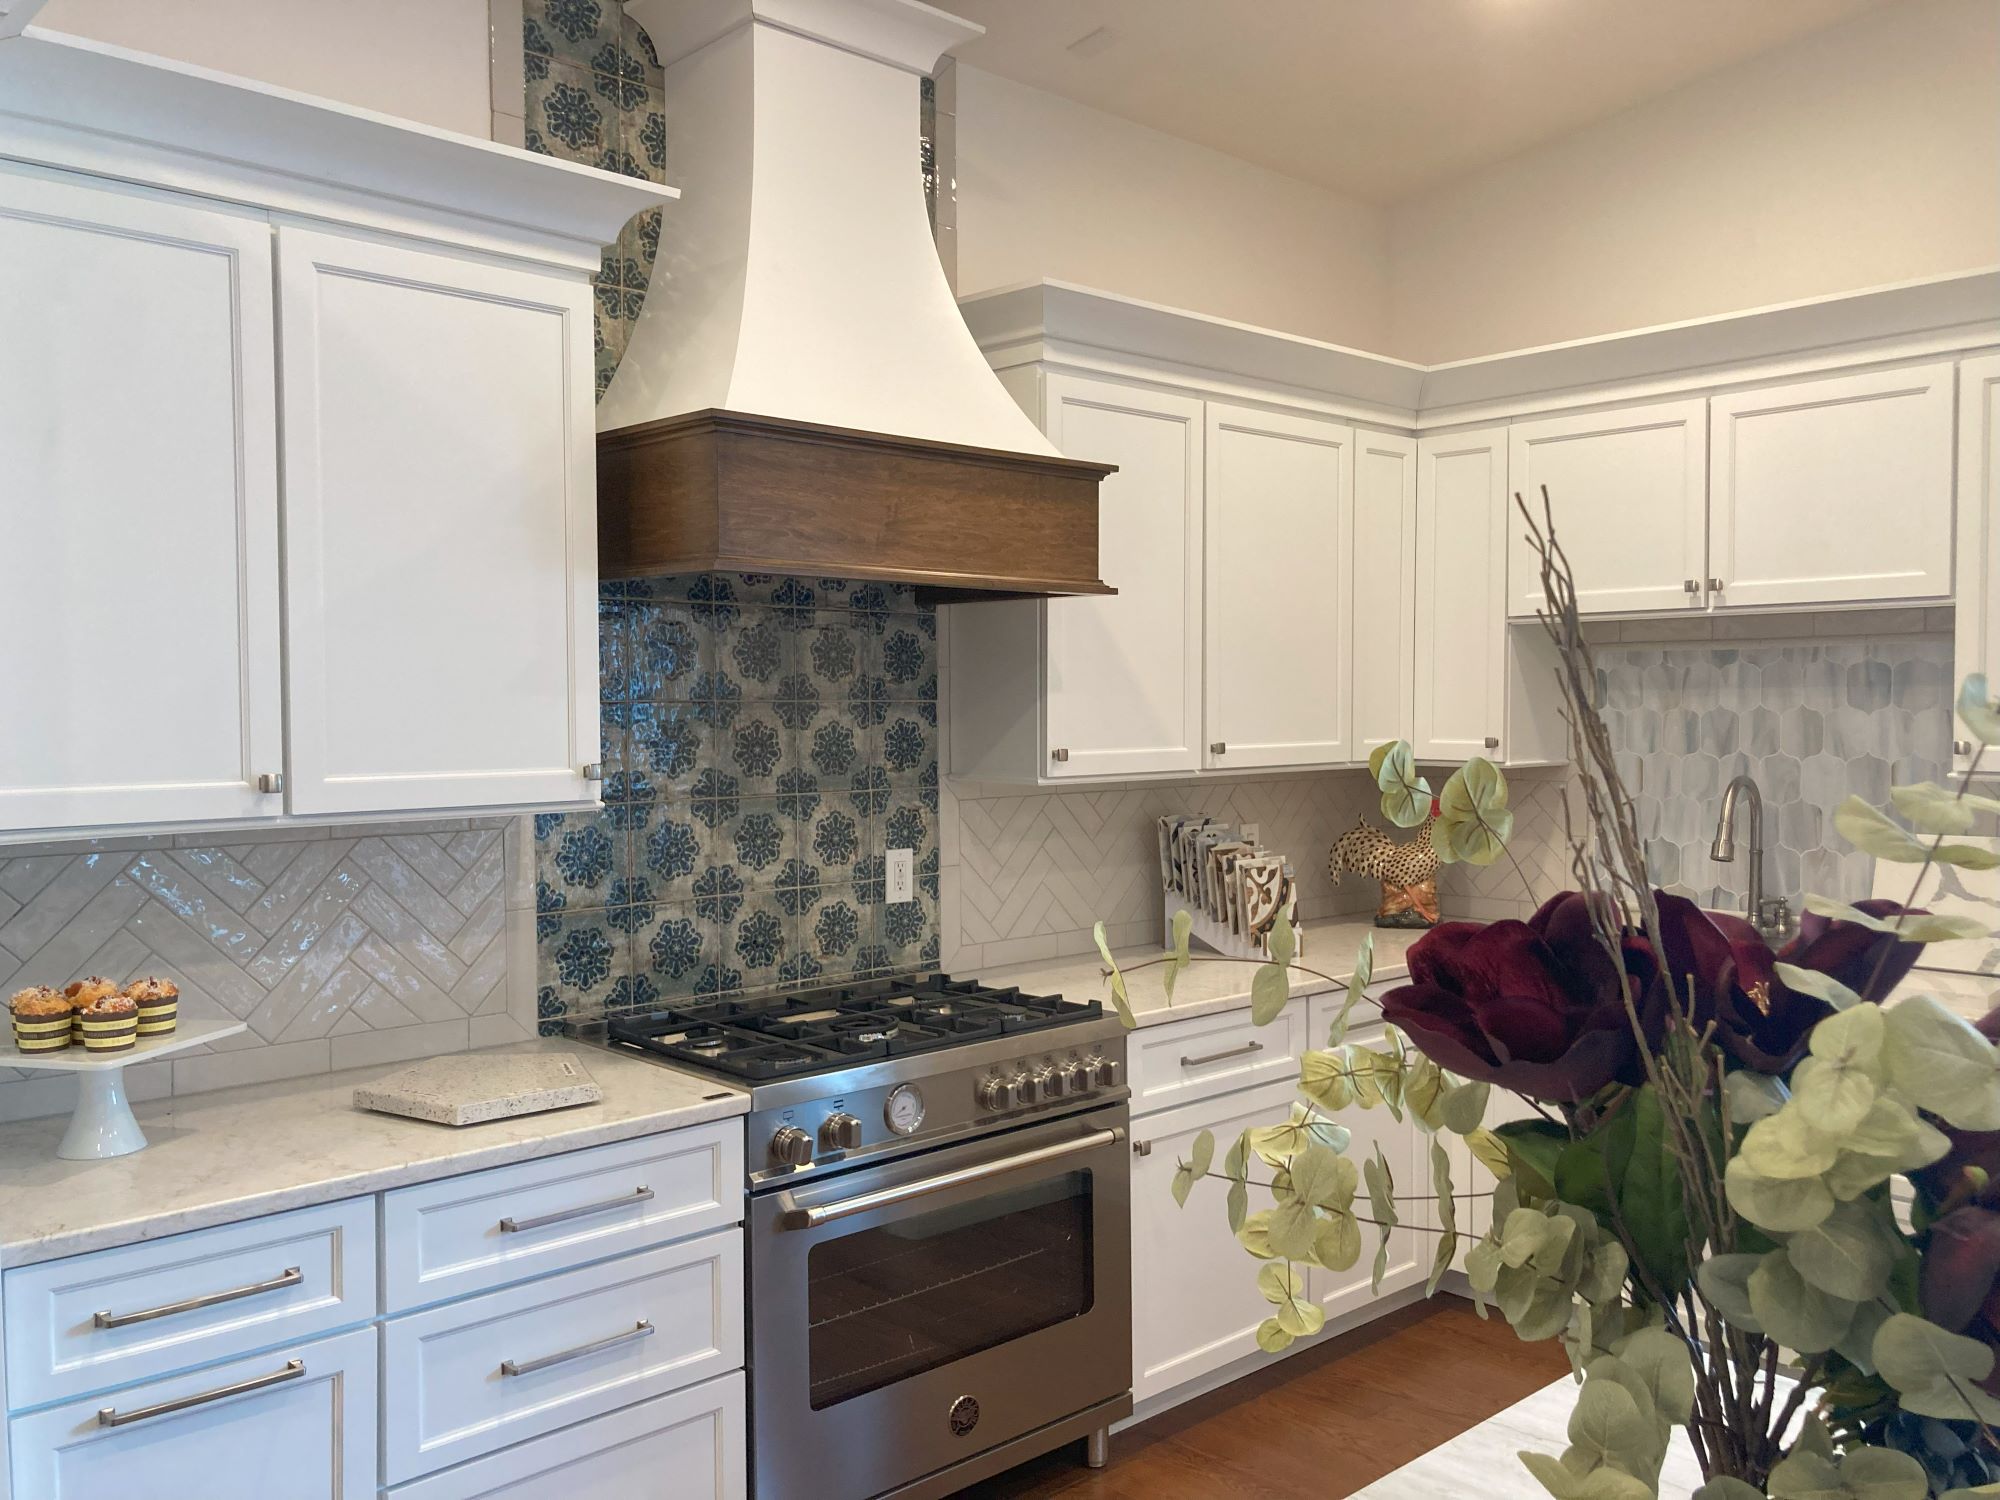 Kitchen Remodel with Statement Tile Stove Backsplash and Custom Range Hood